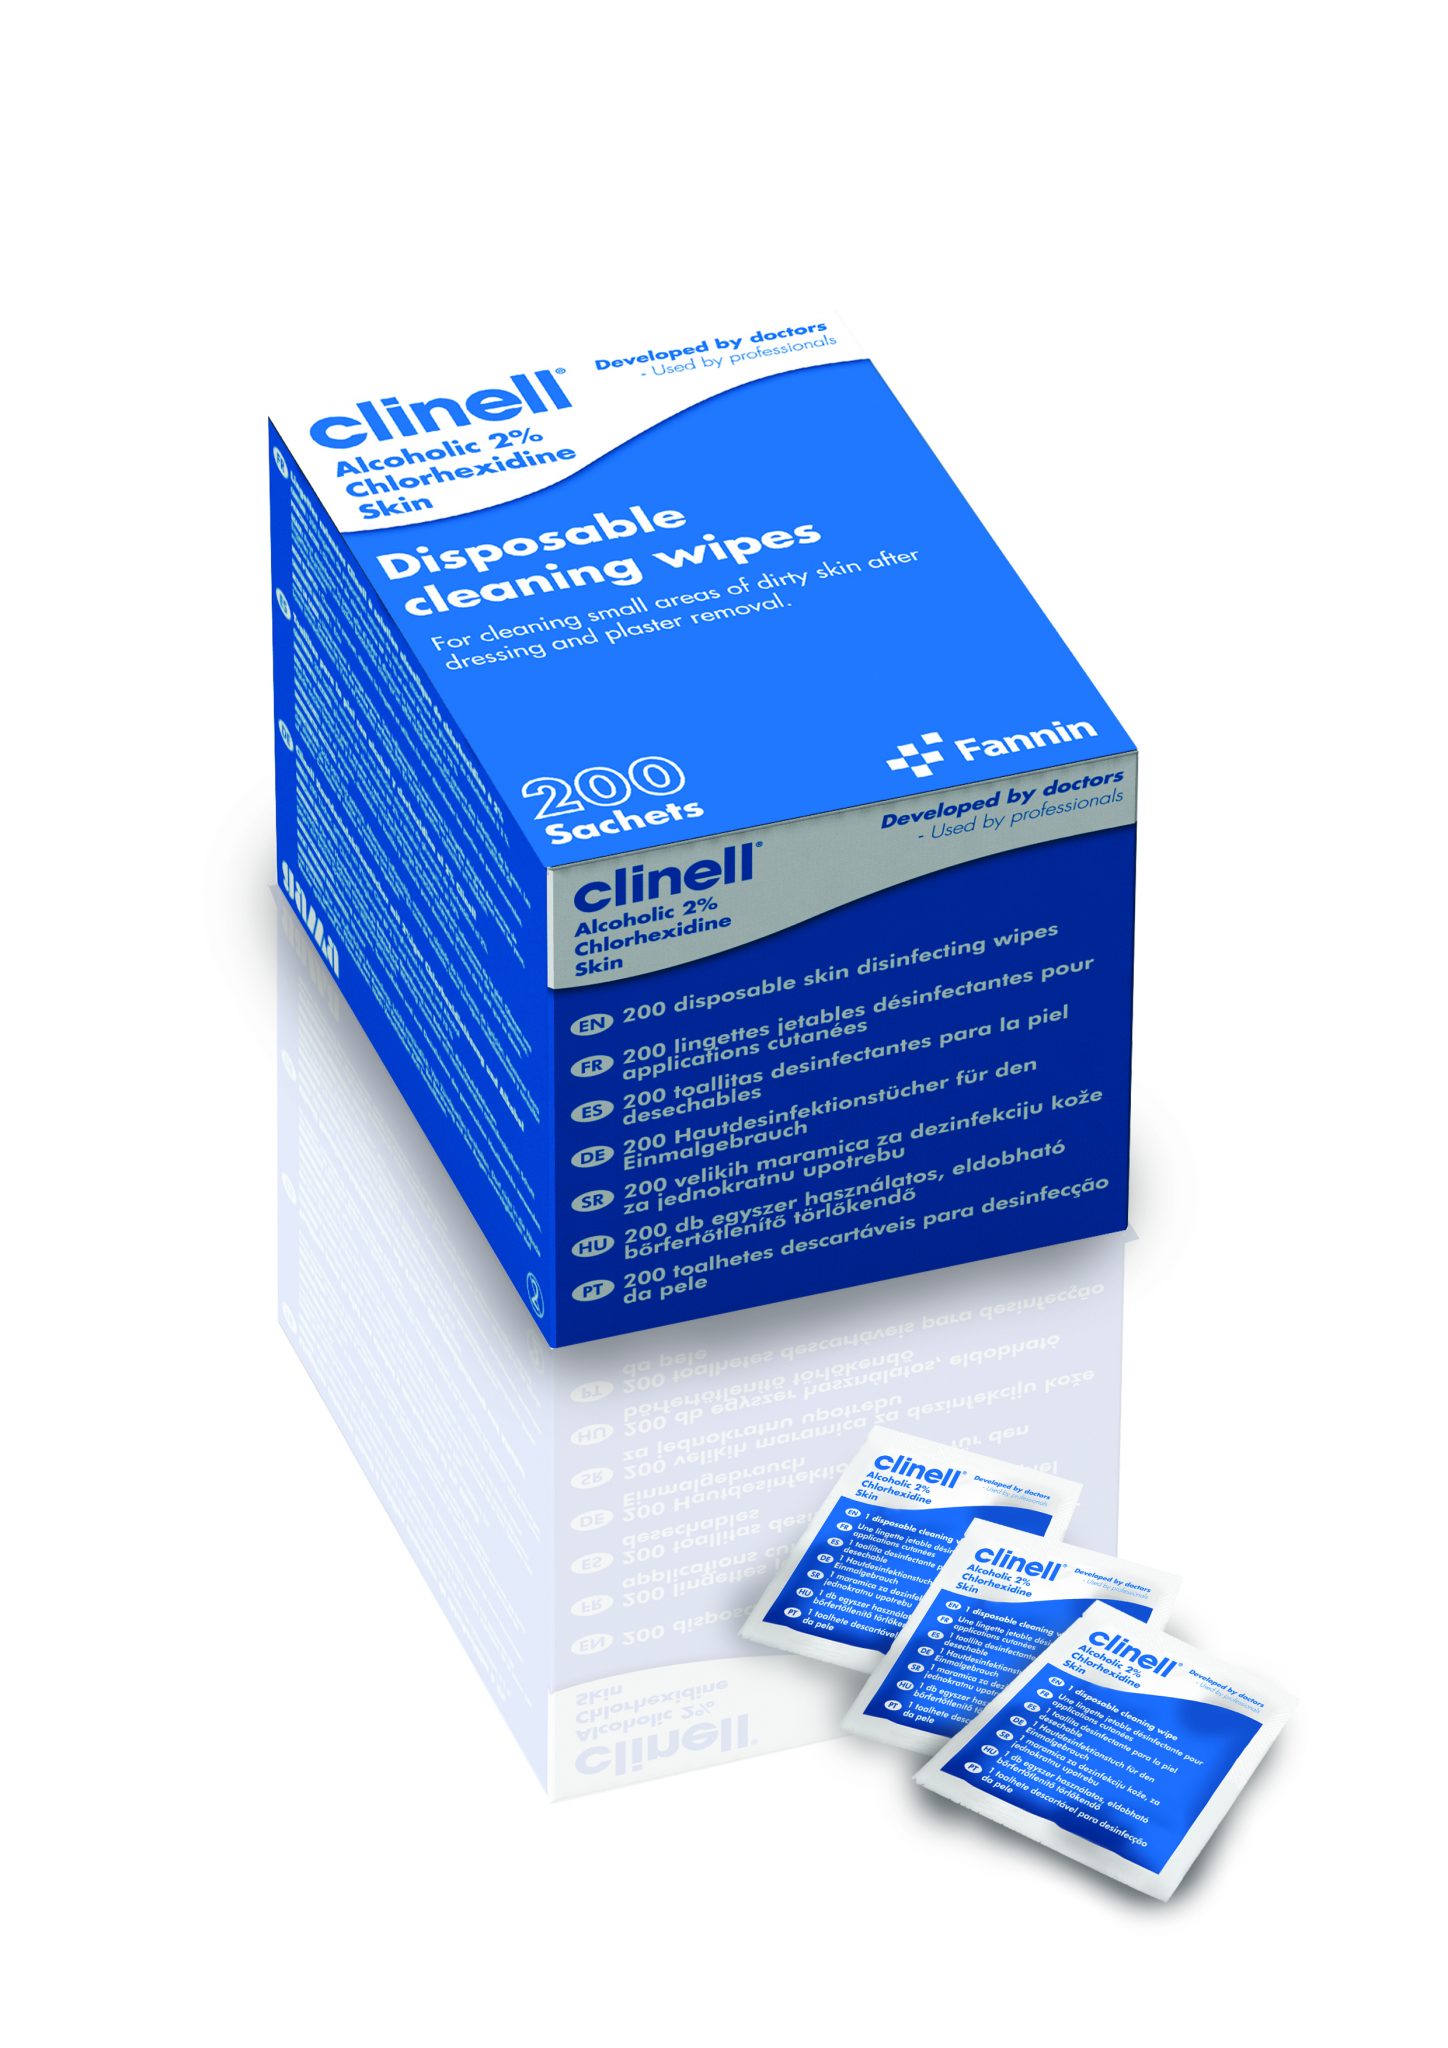 Clinell Alcoholic 2% Chlorhexidine Skin Wipes image